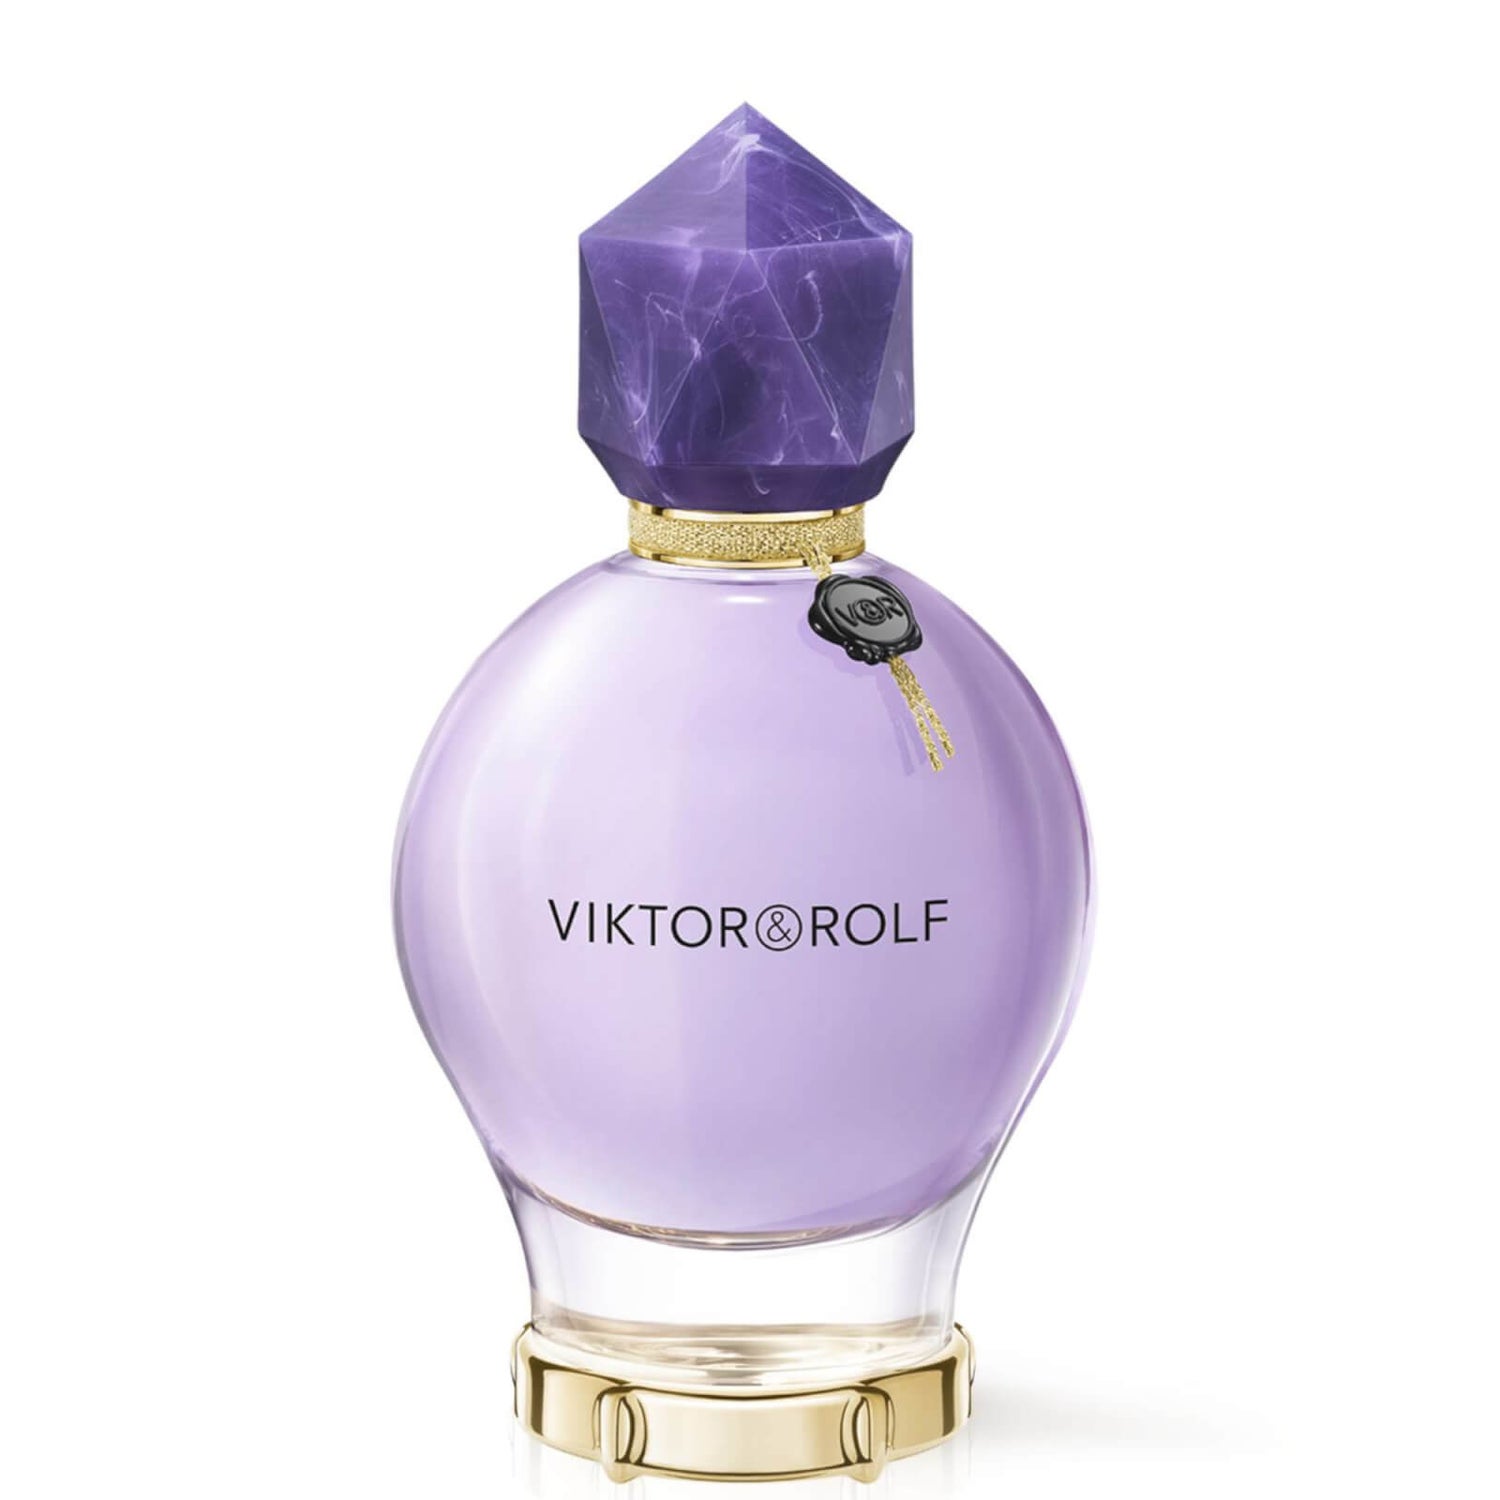 Viktor & Rolf Good Fortune Eau de Parfum 90ml